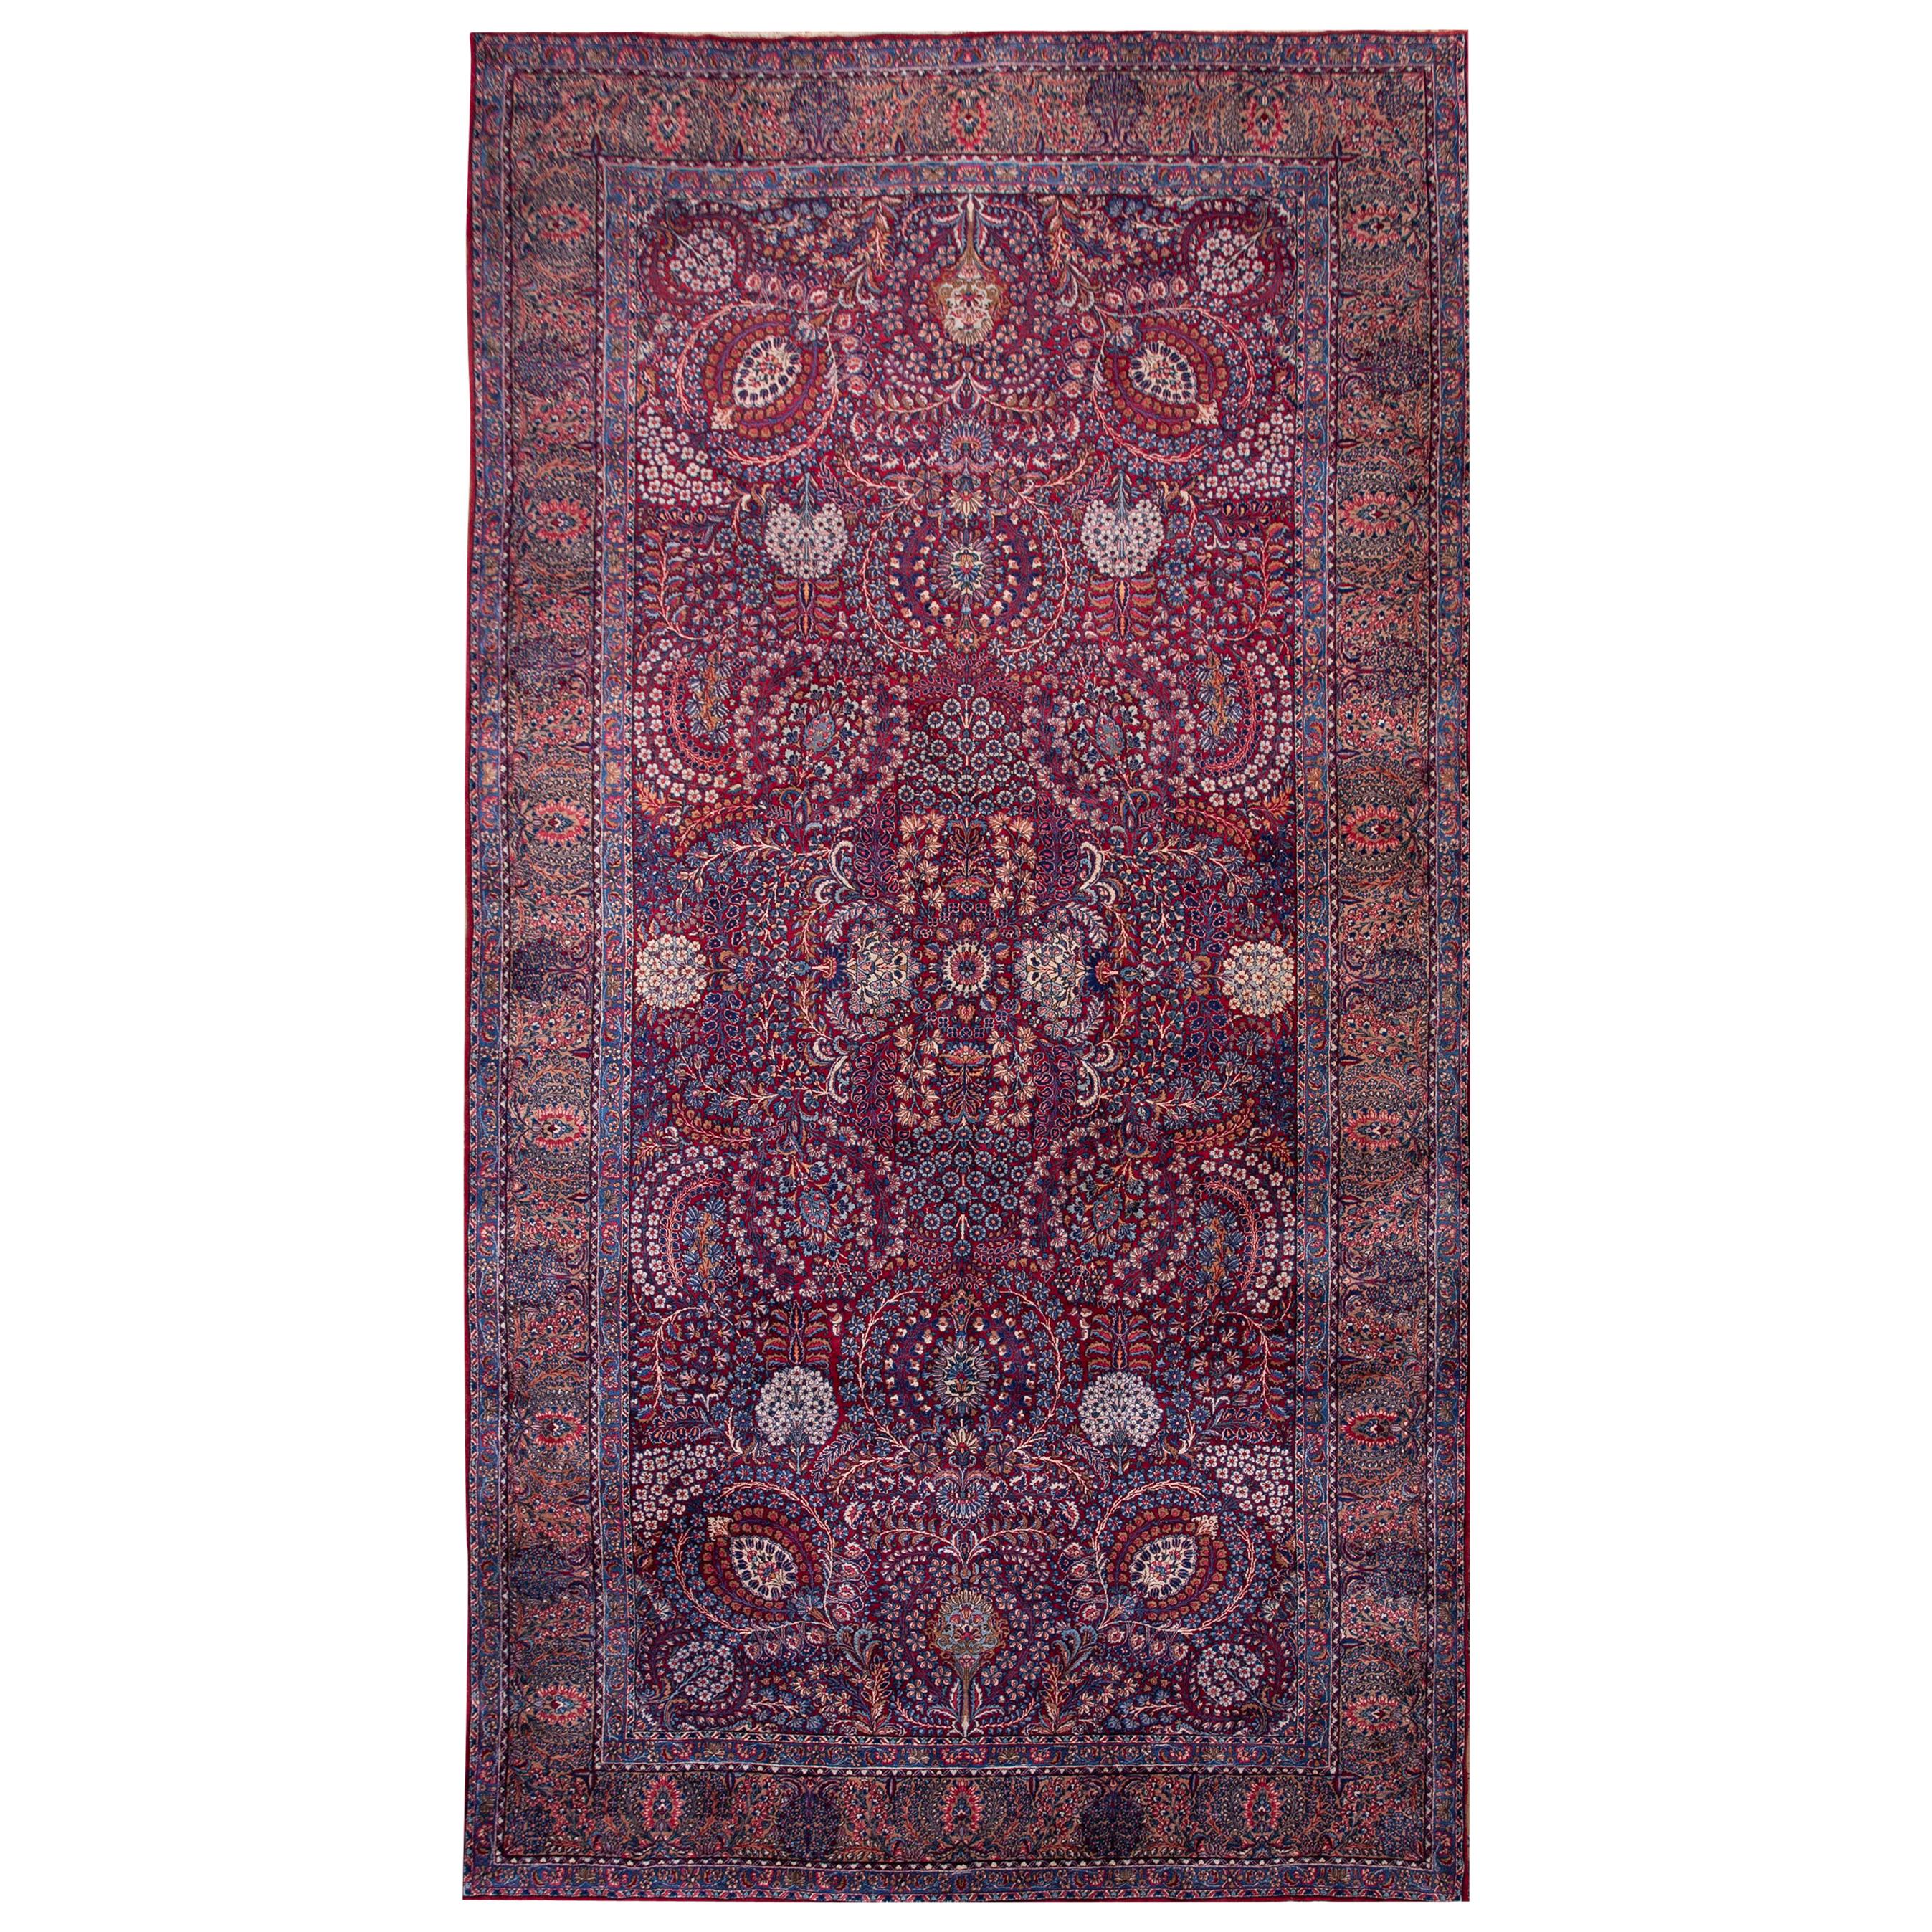 Early 20th Century S.E. Persian Kirman Carpet ( 8'10" x 16'8" - 270 x 508 ) For Sale